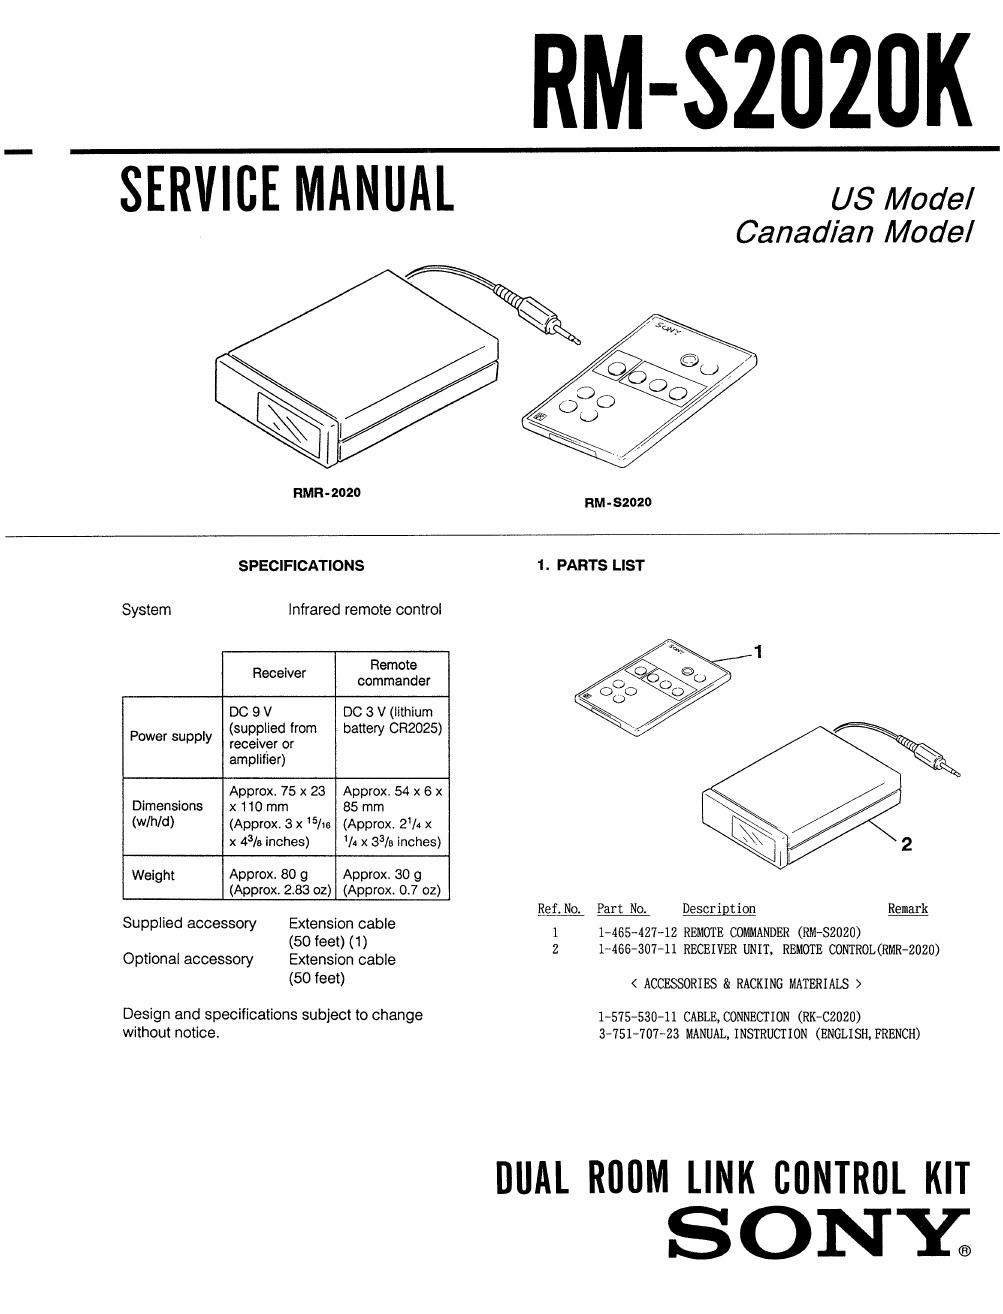 sony rm s 2020 k service manual